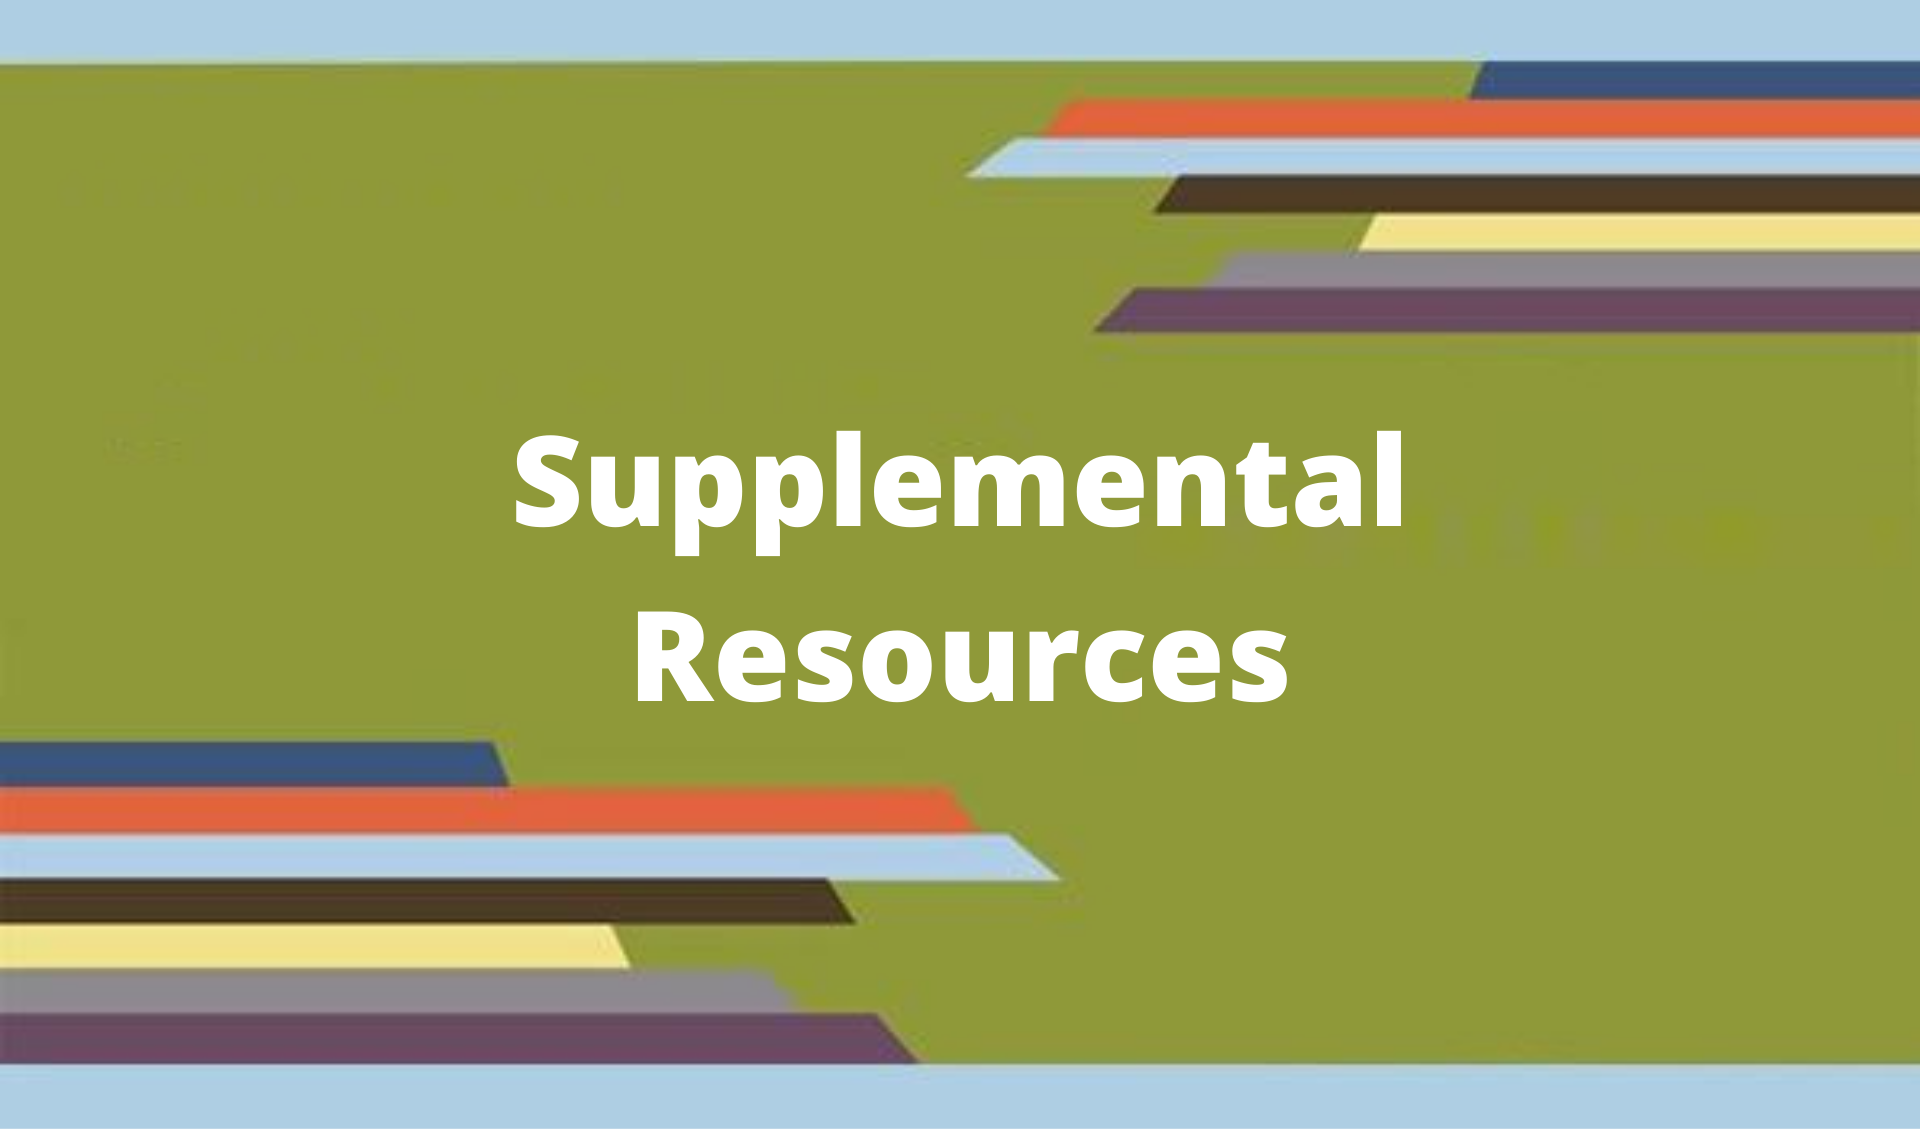 SE PTTC supplemental resources image